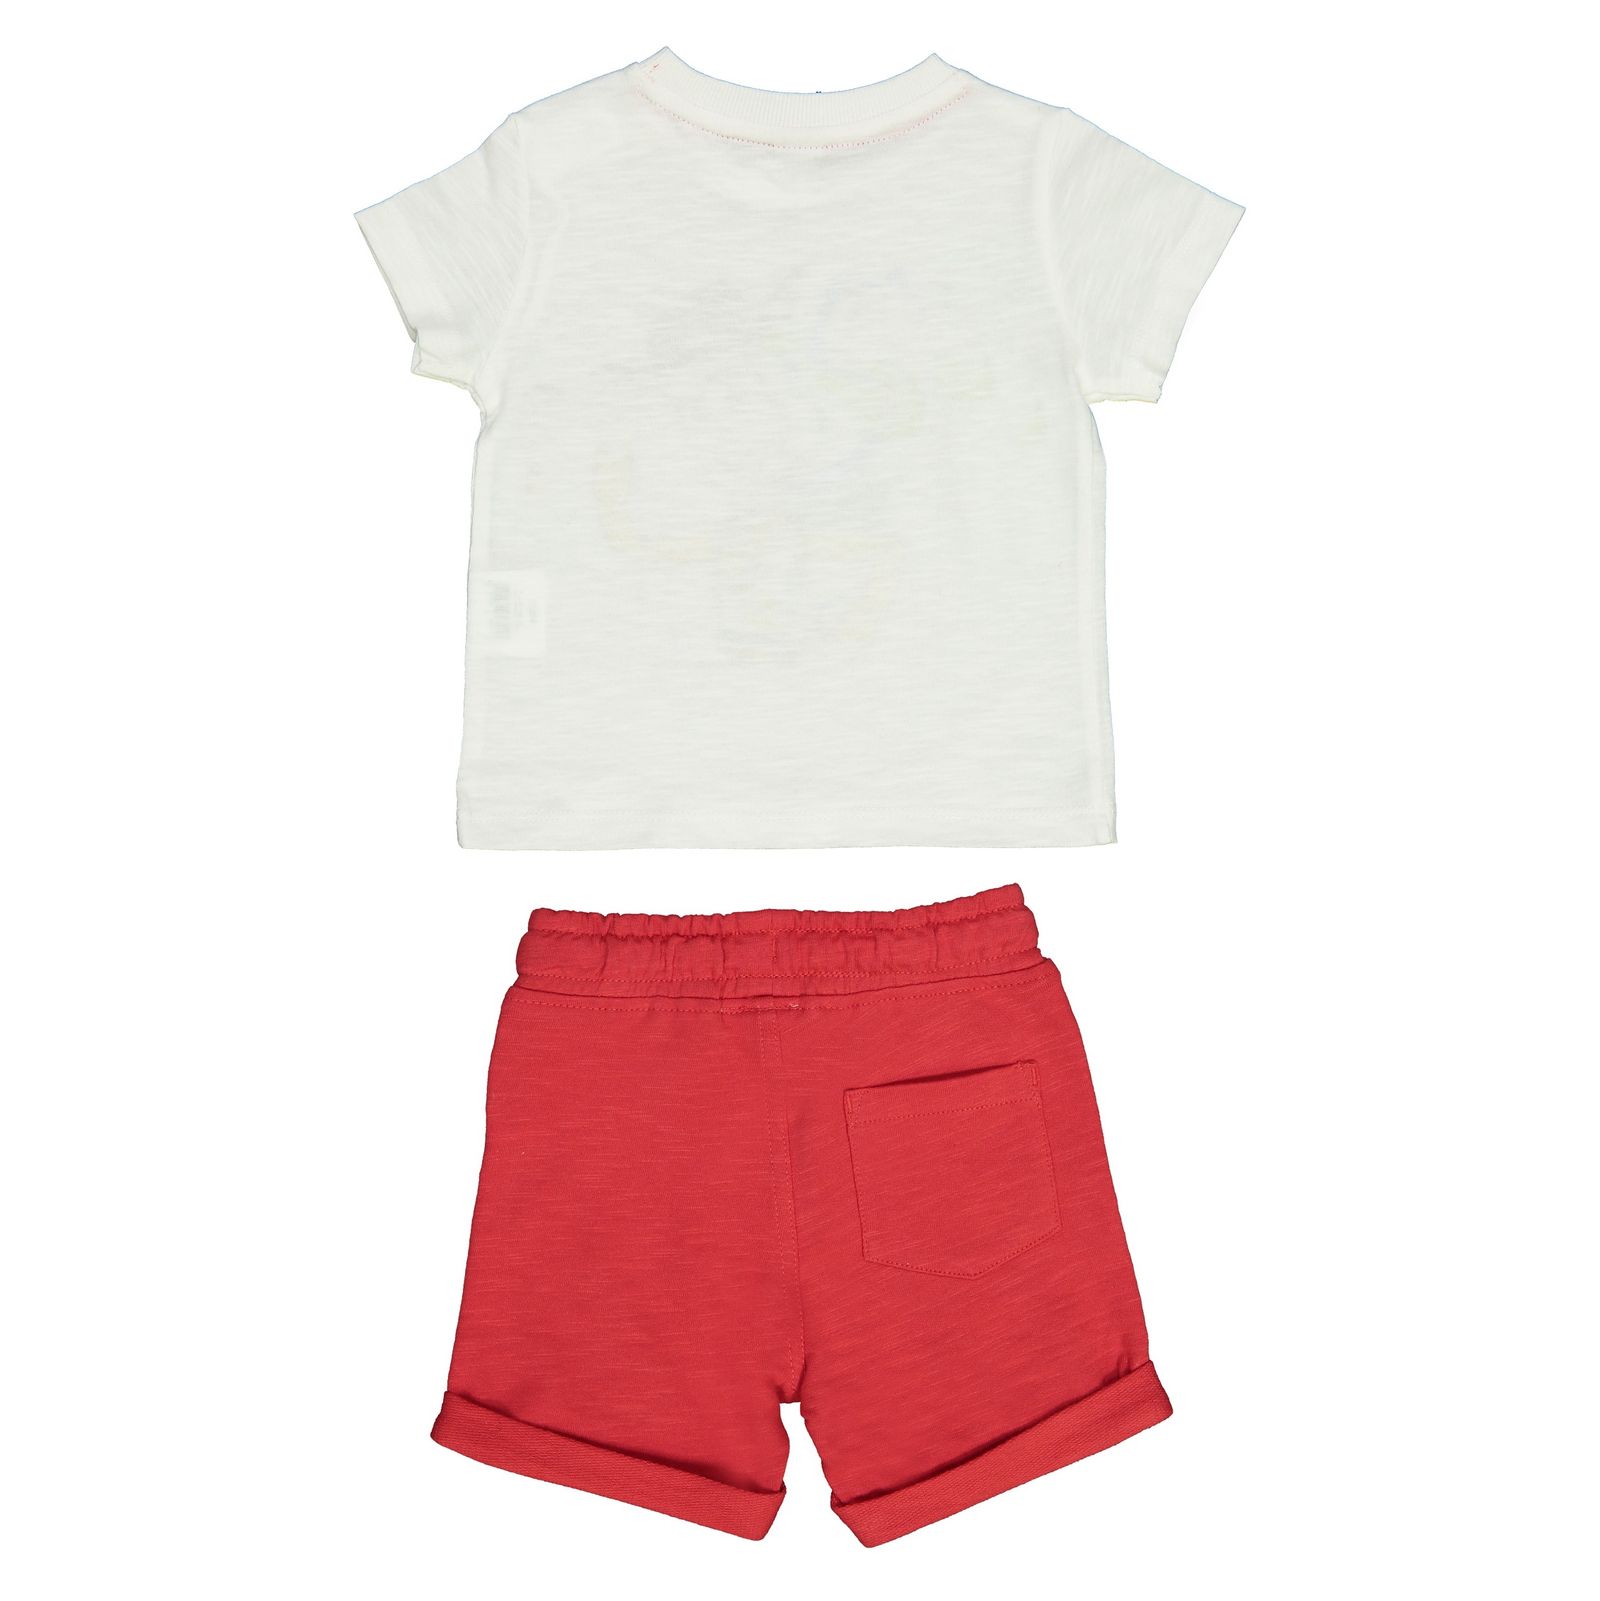 تی شرت و شلوارک نخی نوزادی پسرانه - بلوکیدز - سفيد/قرمز - 3